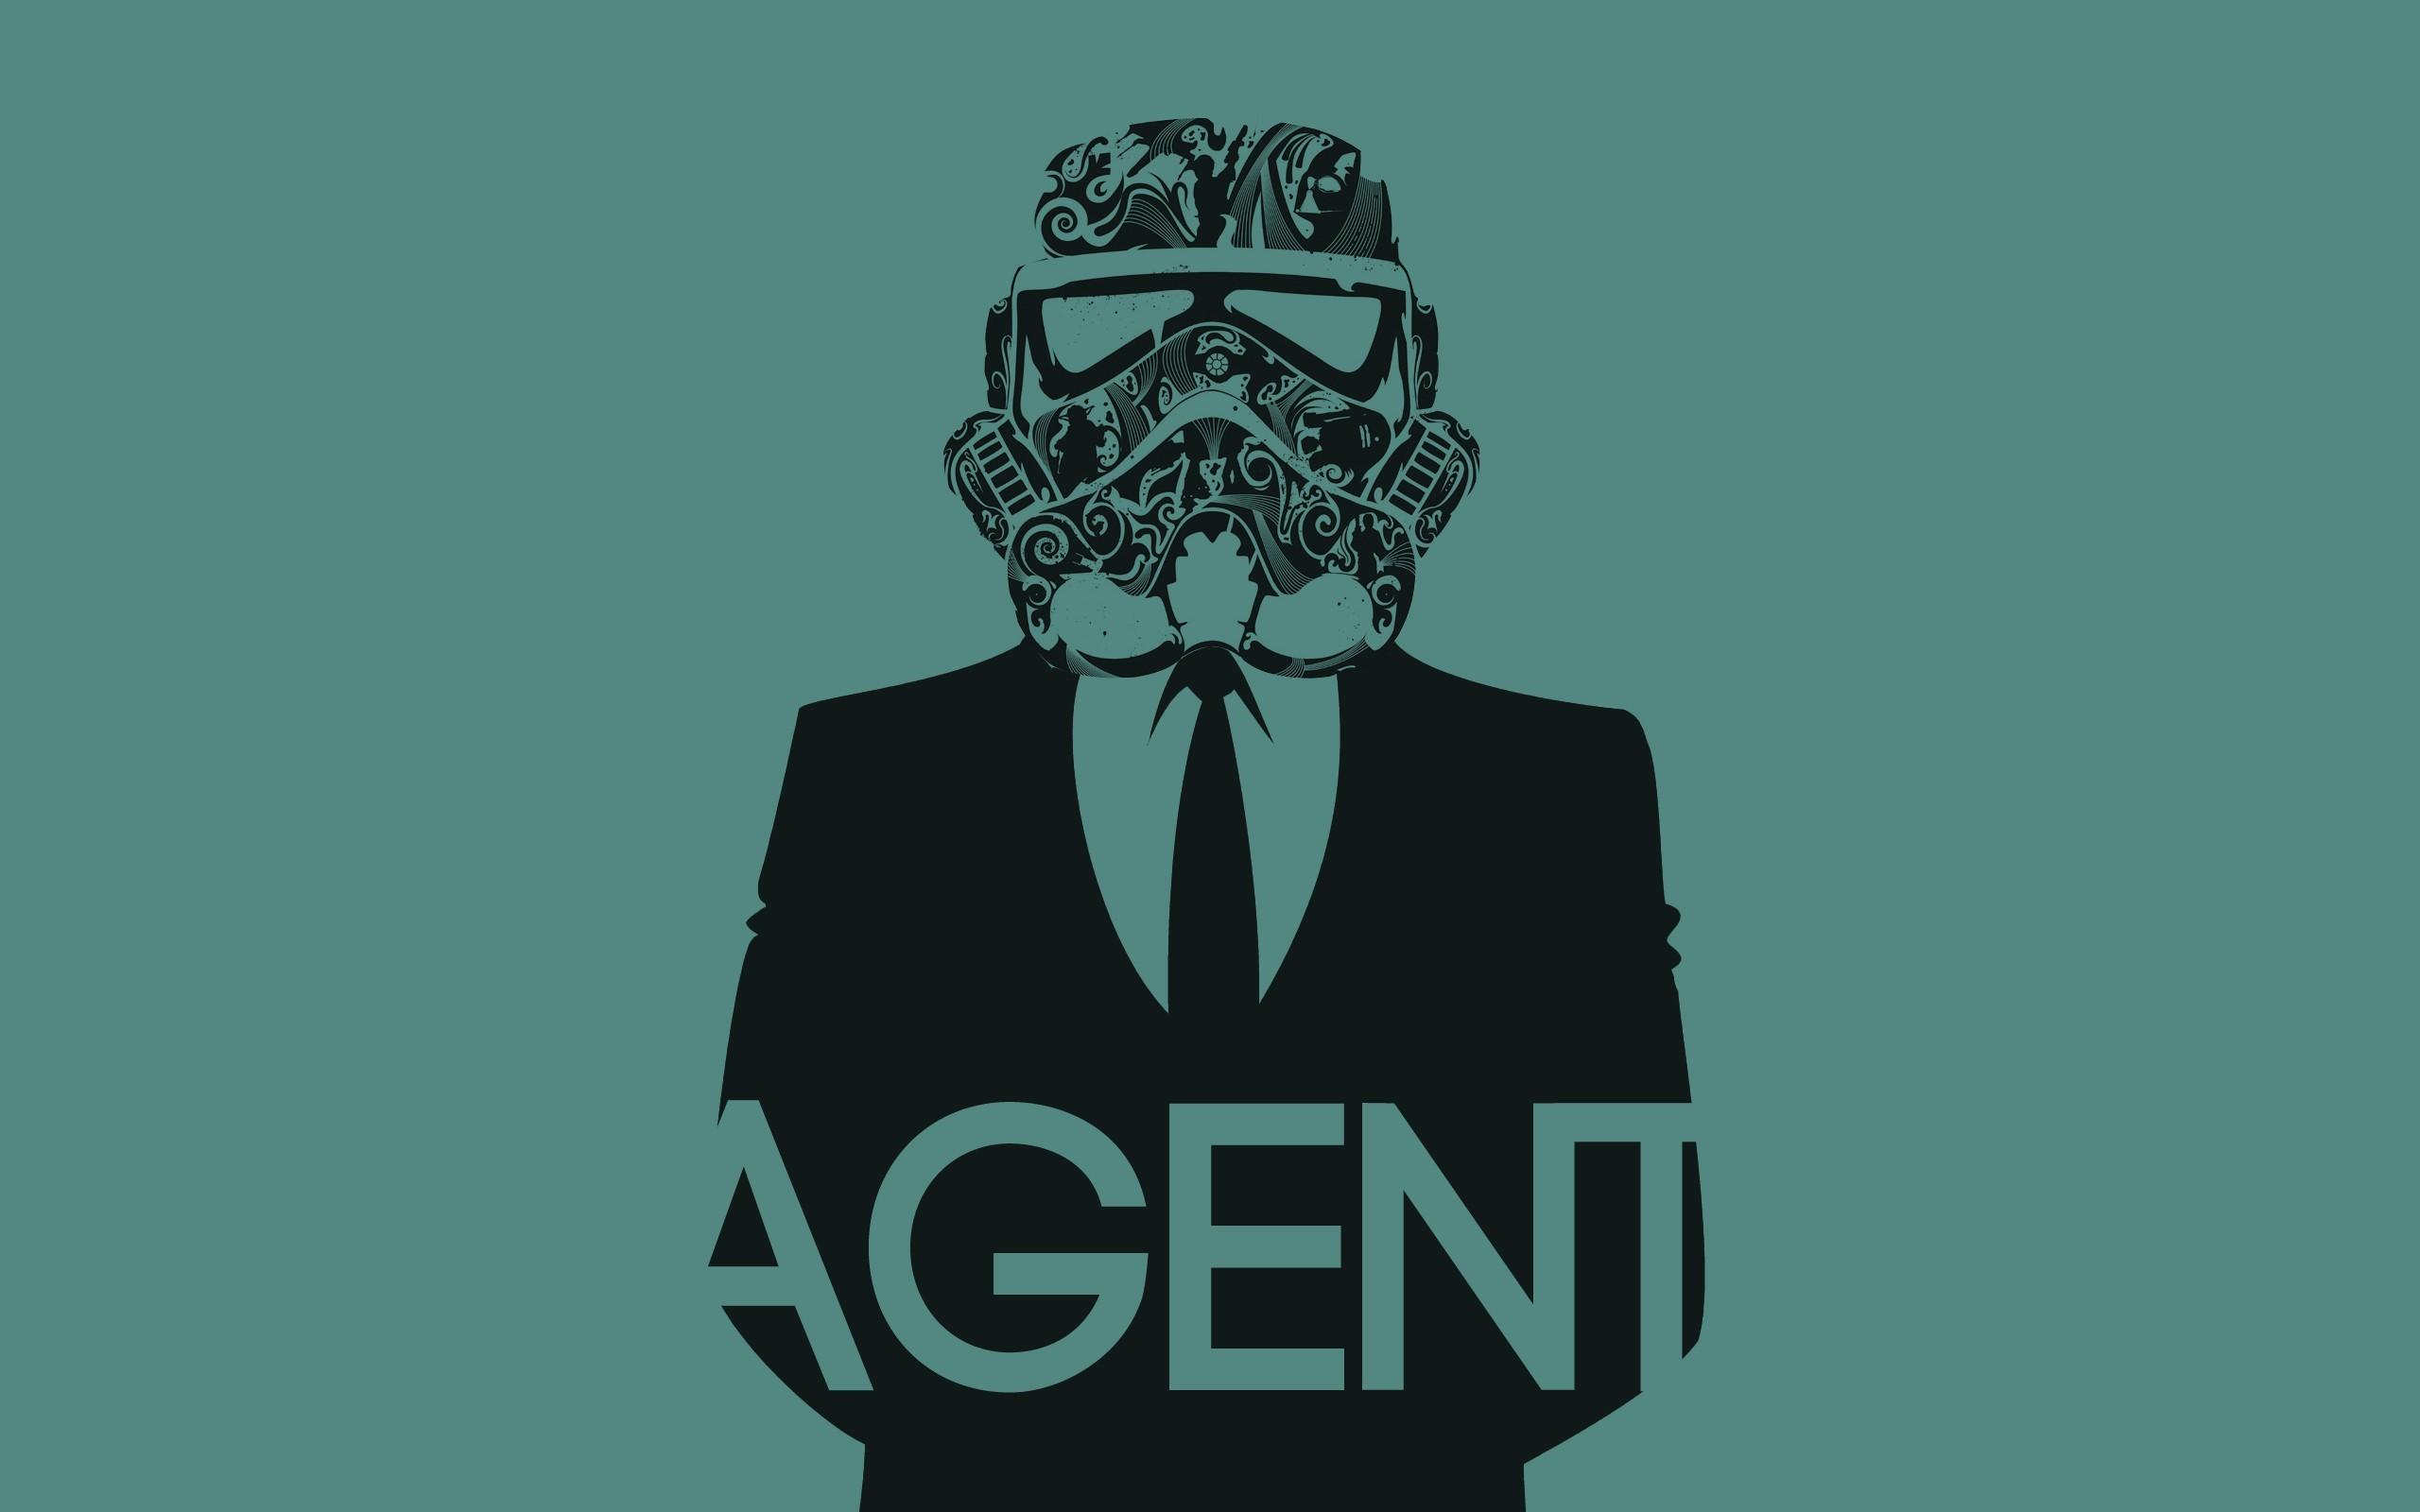 Star wars agent stormtroopers wallpaper. PC